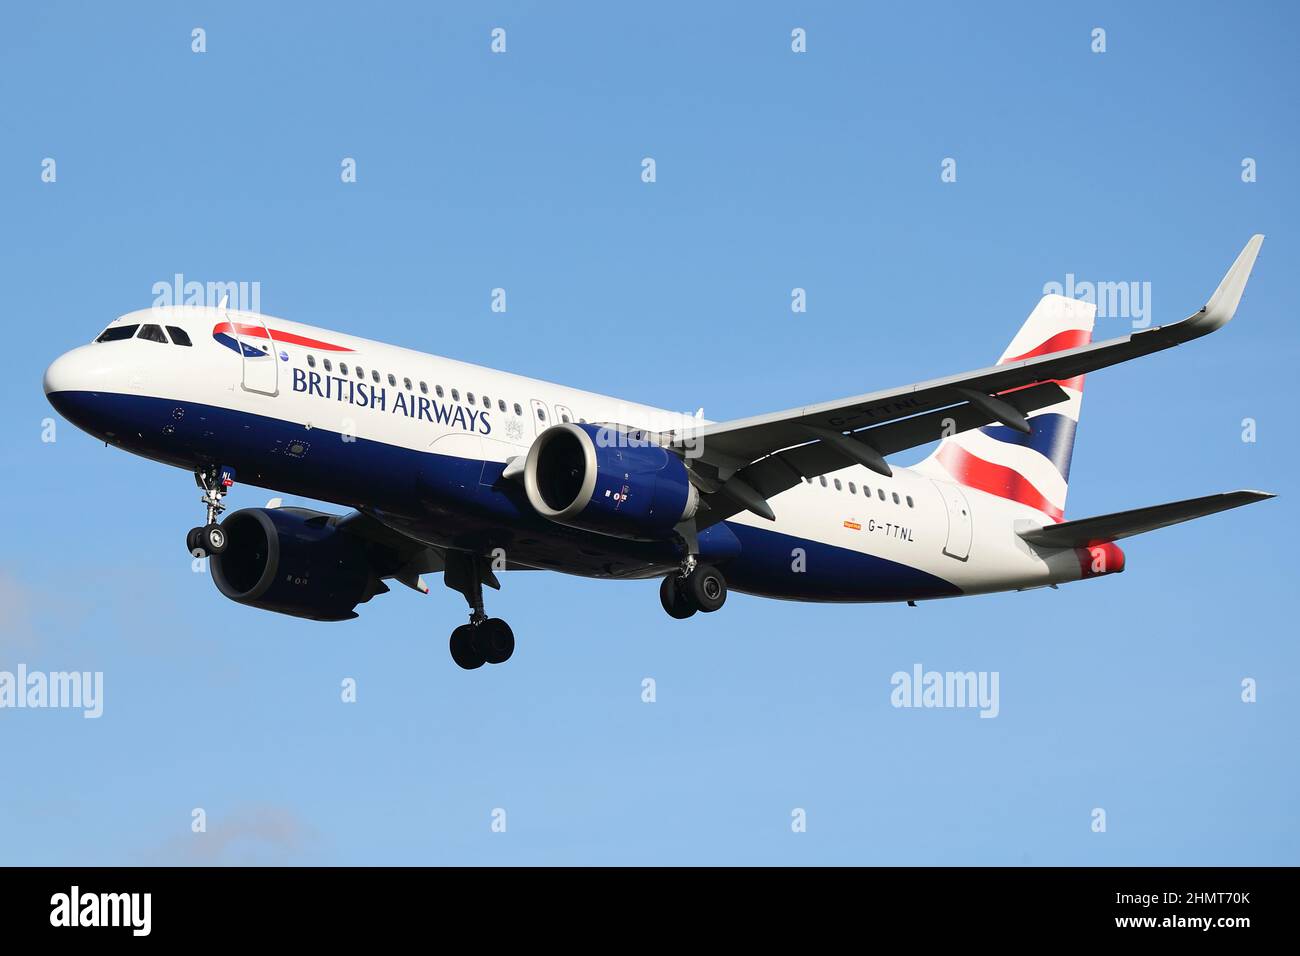 British Airways Airbus A320neo G-TTNL approaching London Heathrow Airport, London, UK Stock Photo